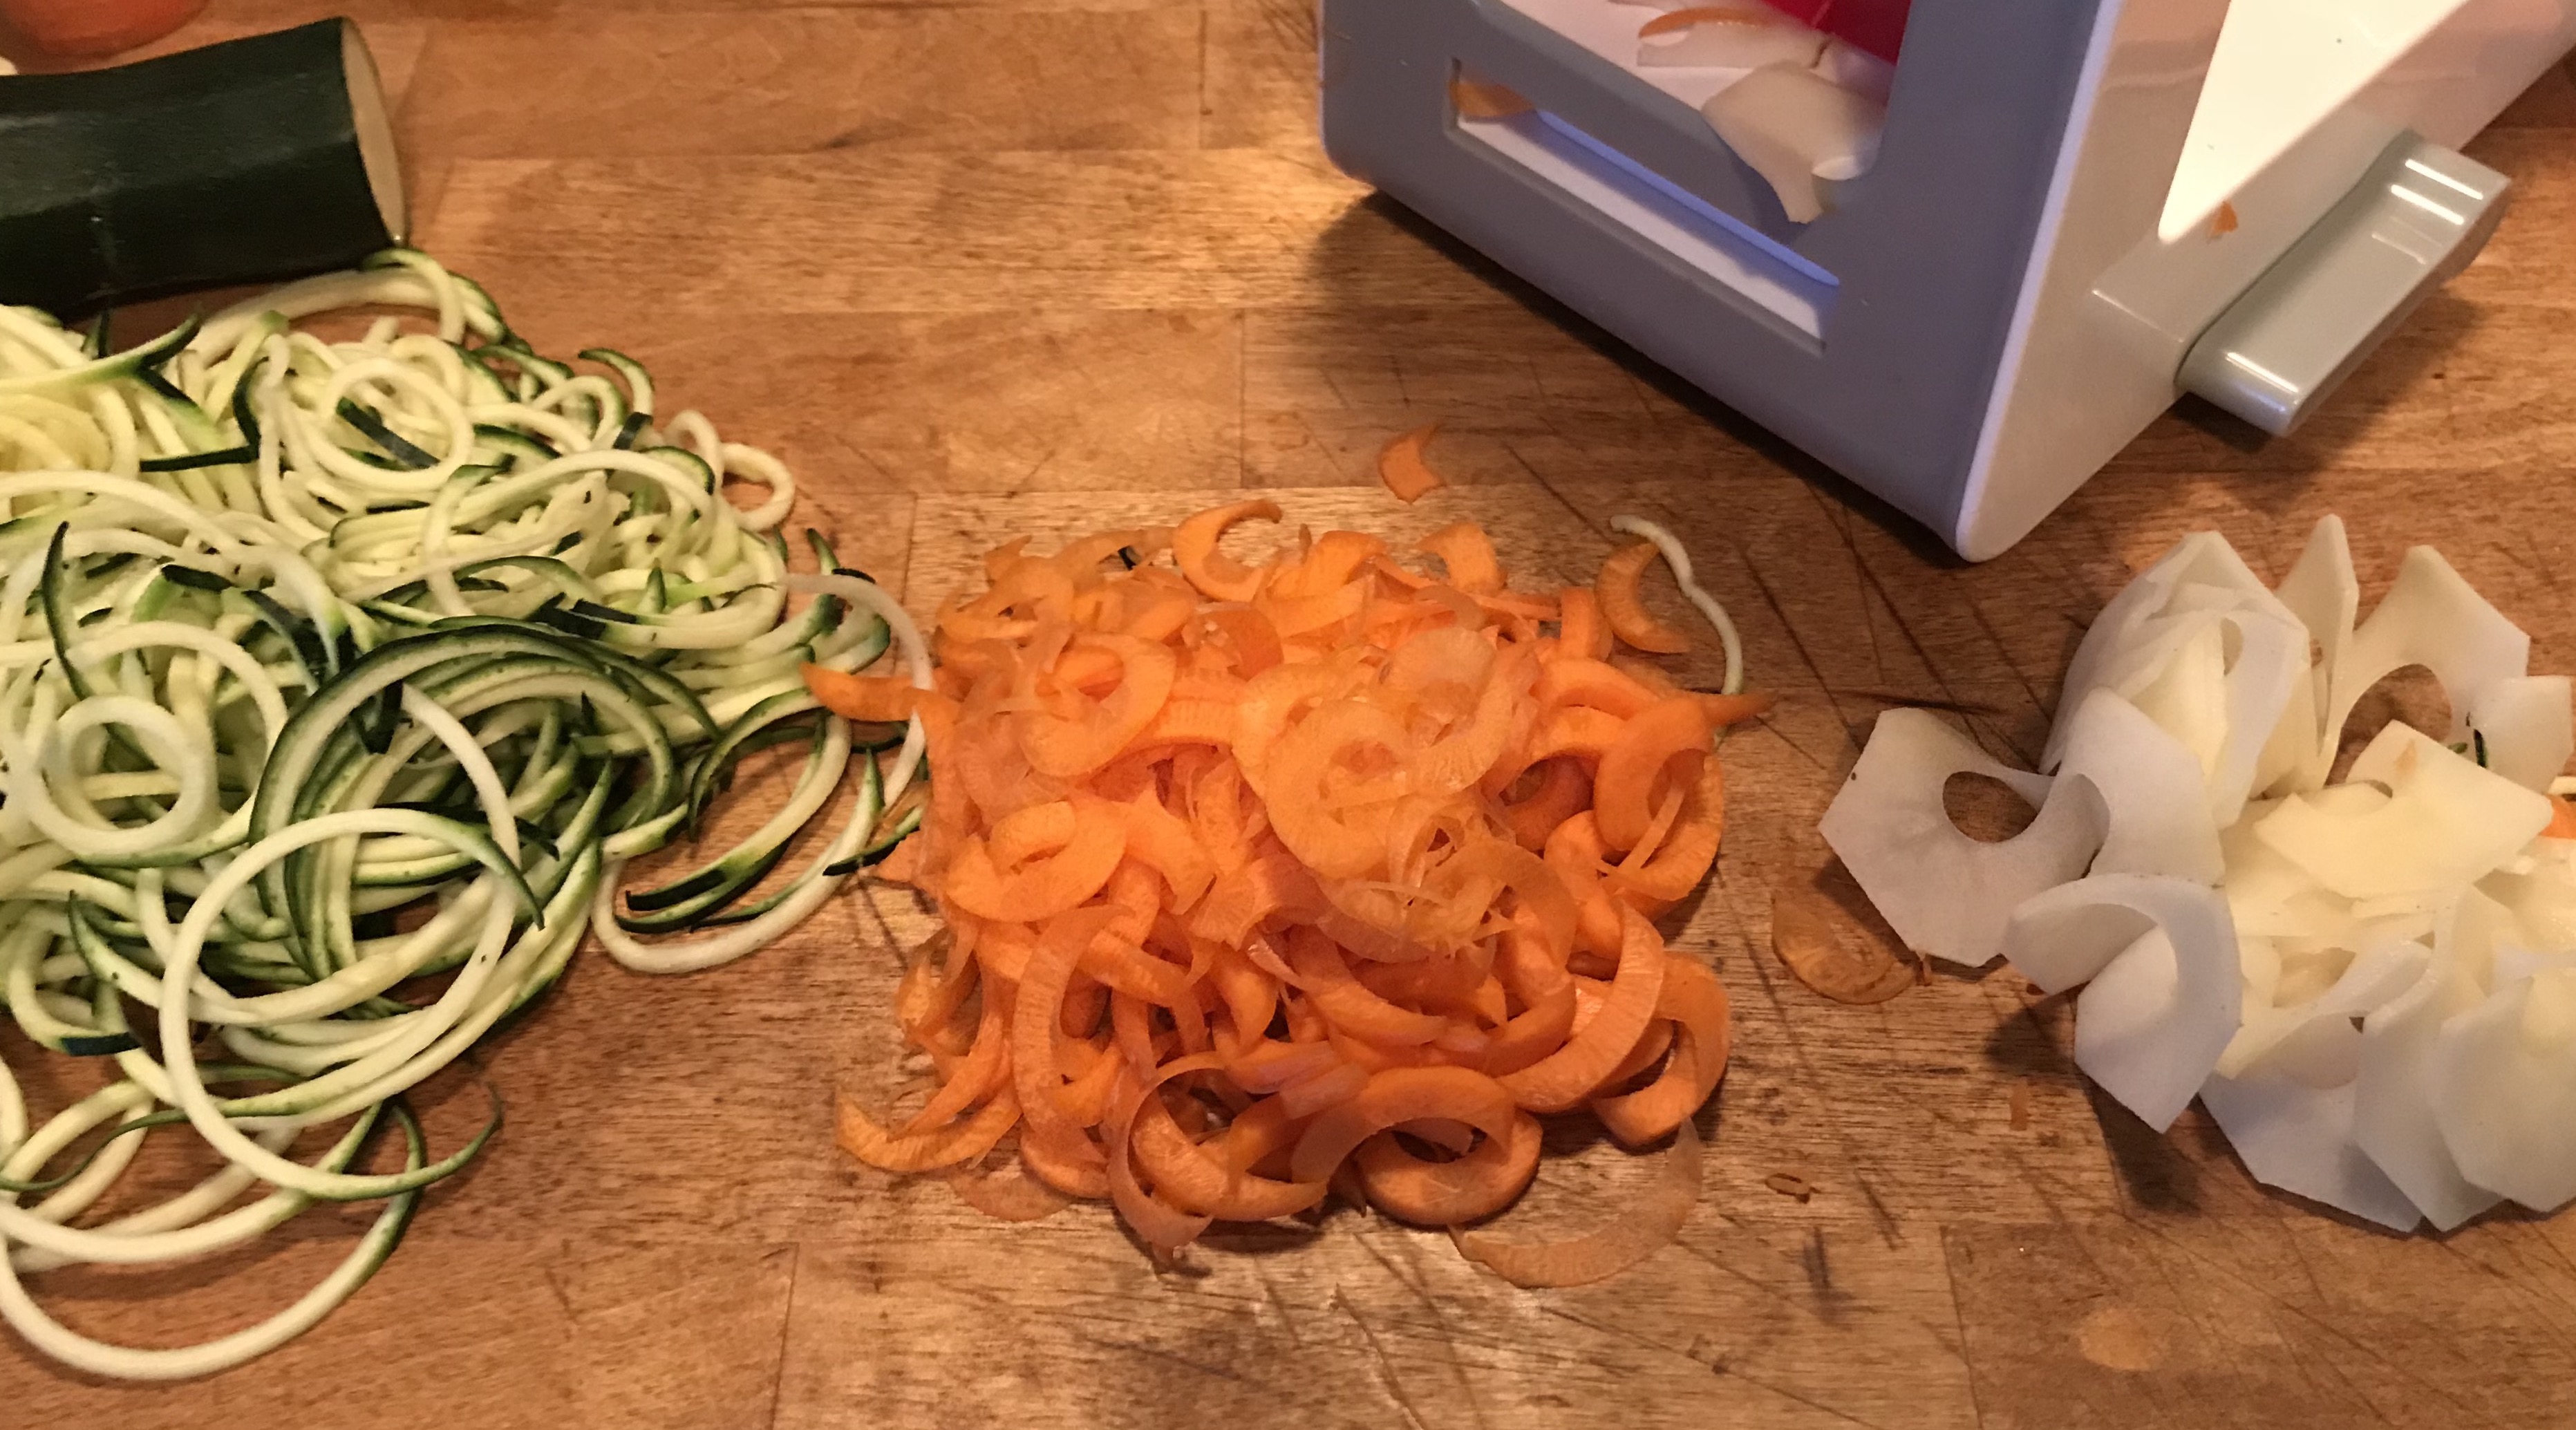 https://blog.bestbuy.ca/wp-content/uploads/2018/07/OXO-Spiralizer-vegetables.jpg